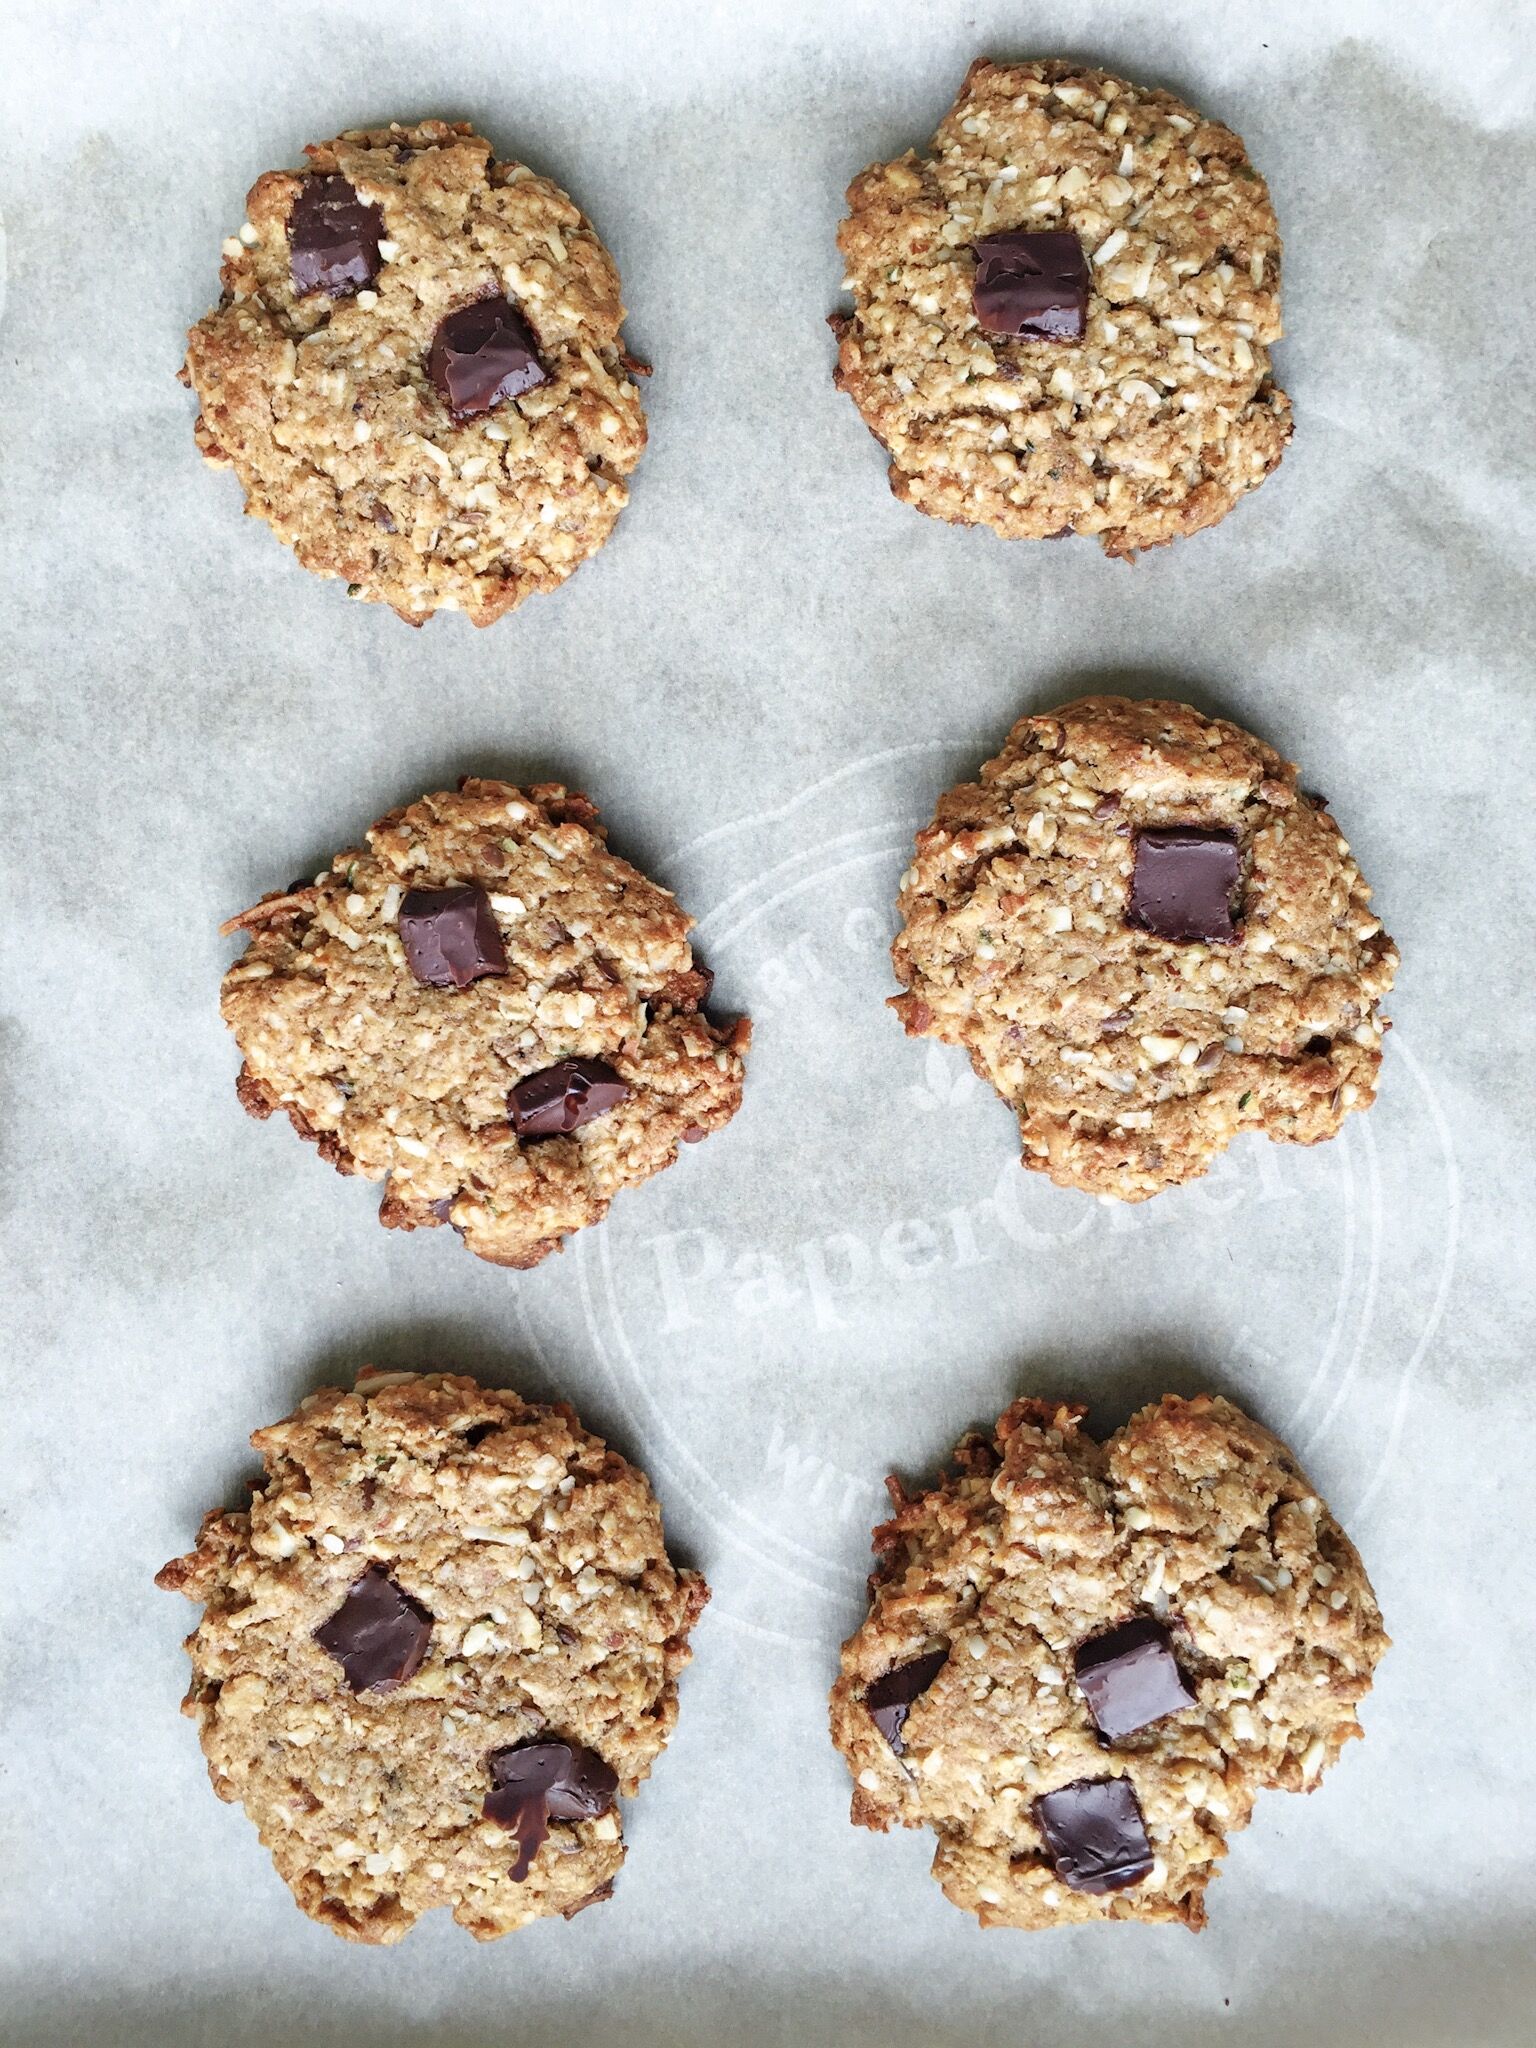 Boobie Cookies ... aka Lactation cookies to help boost breast milk production